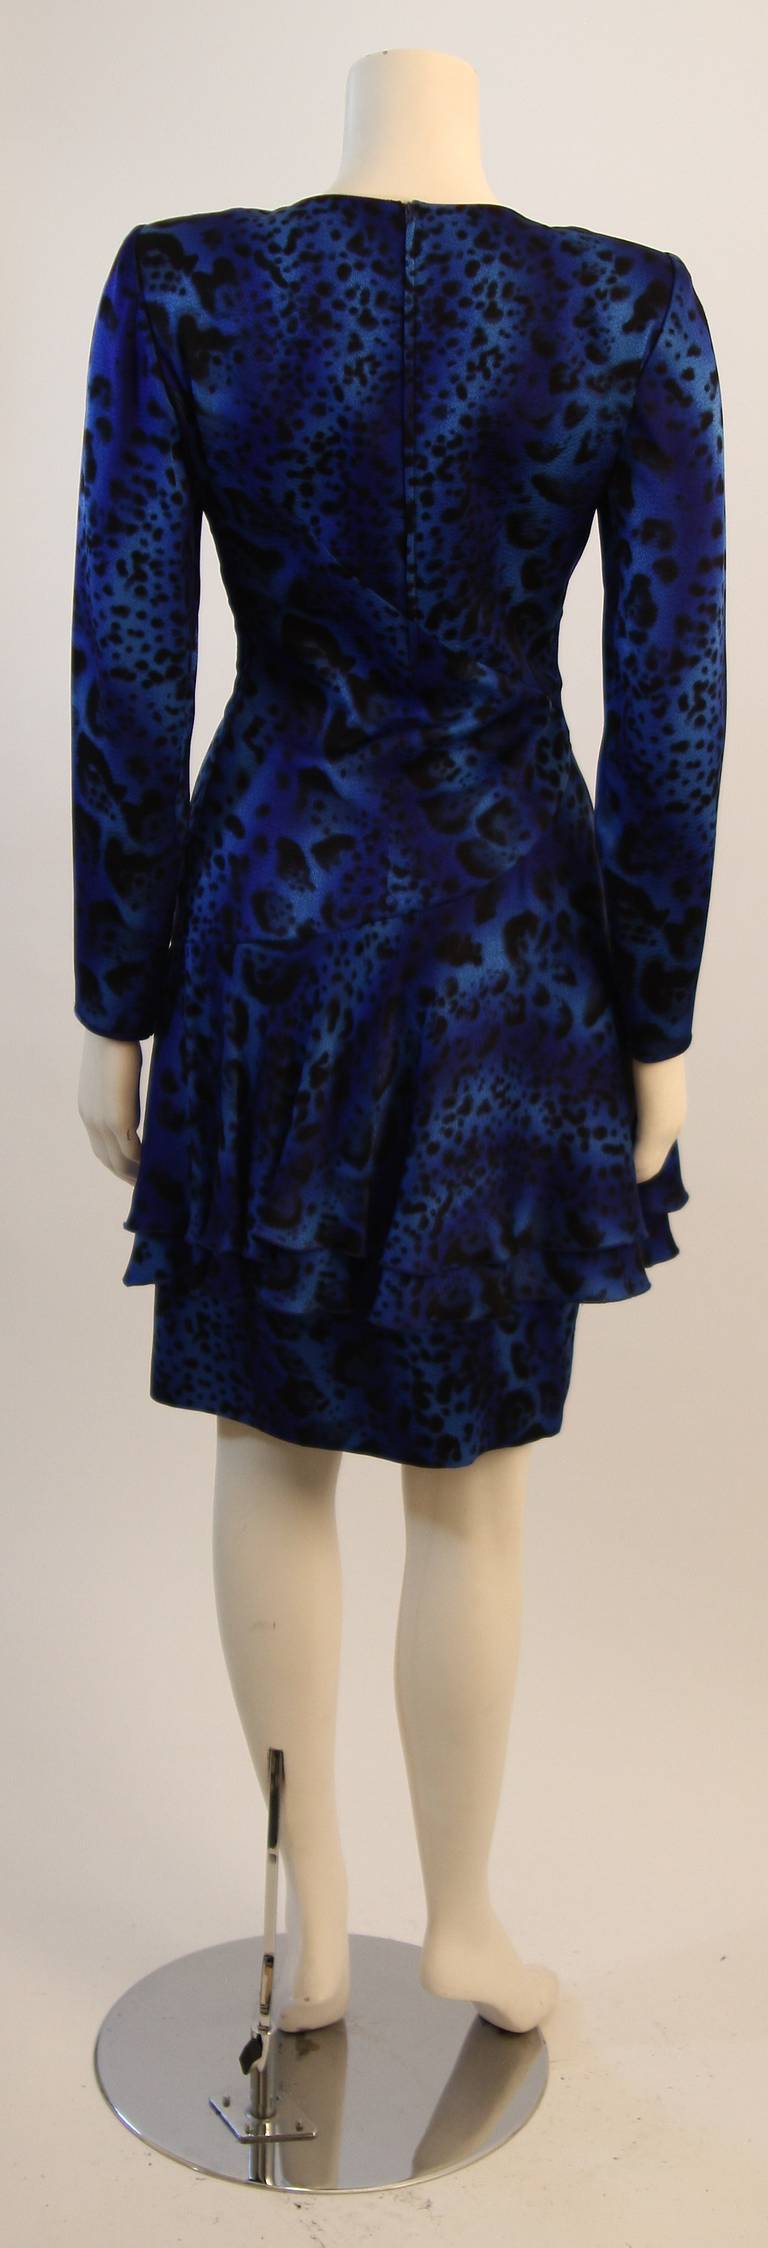 Emanuel Ungaro Rich Blue Abstract Animal Print Dress Size 8 5